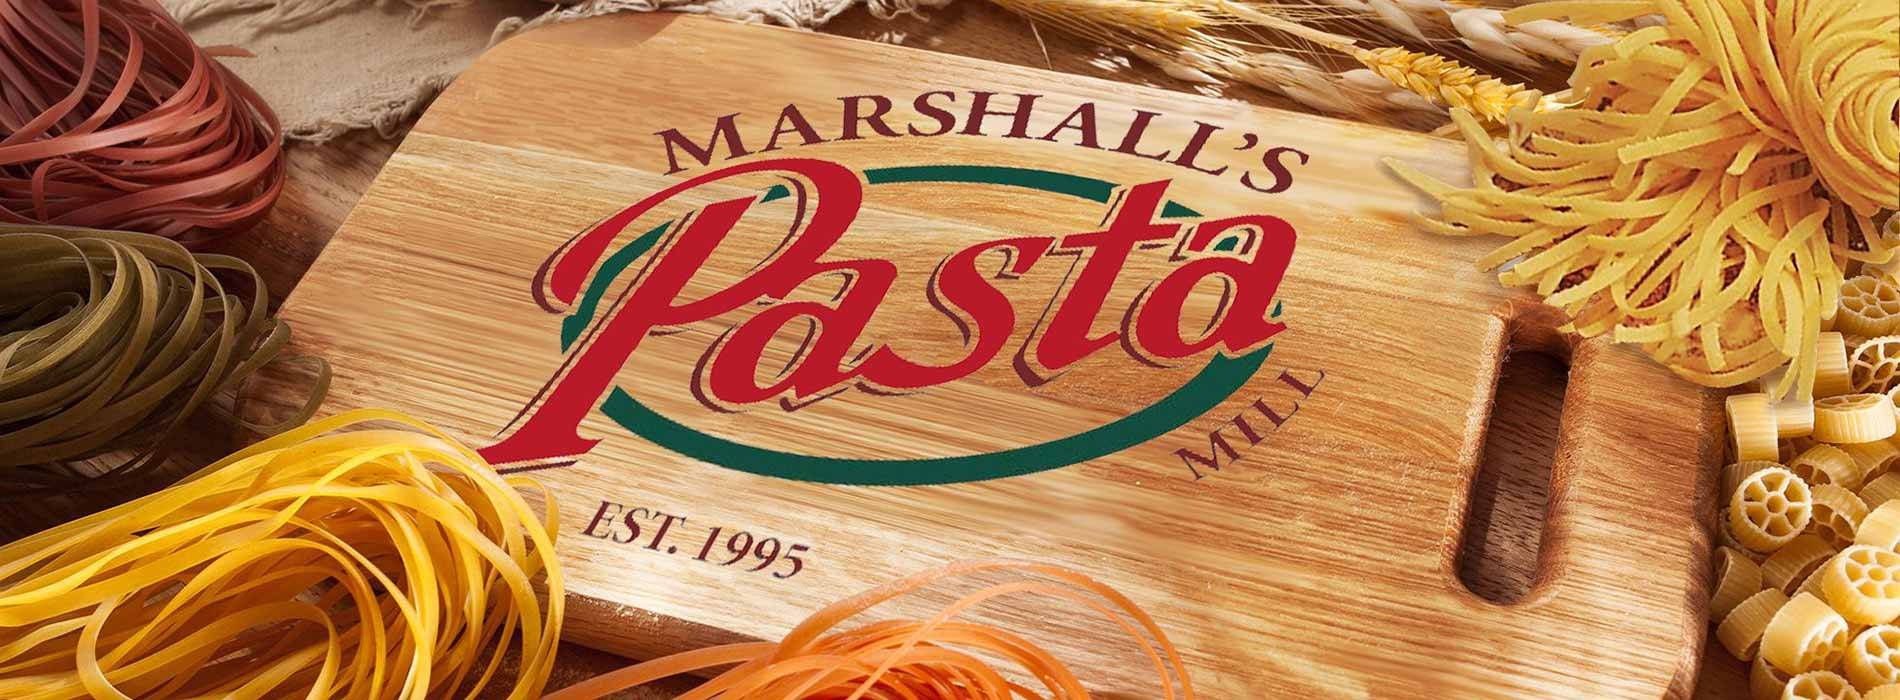 Marshall's Pasta Logo